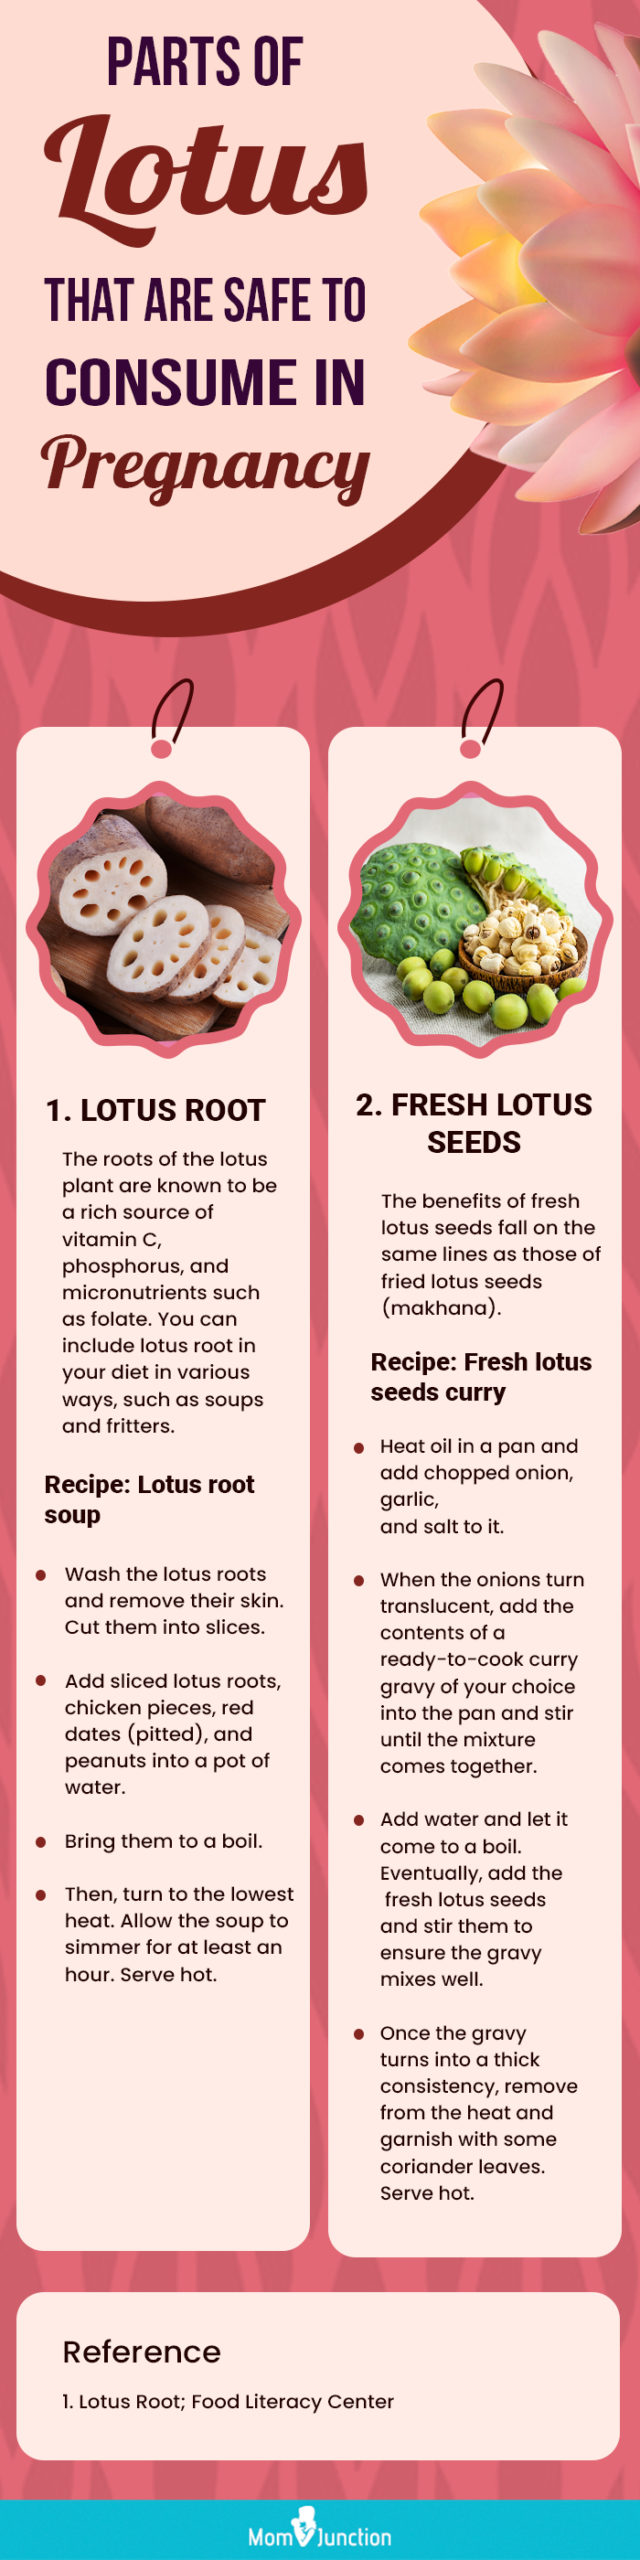 lotus during pregnancy (infographic)